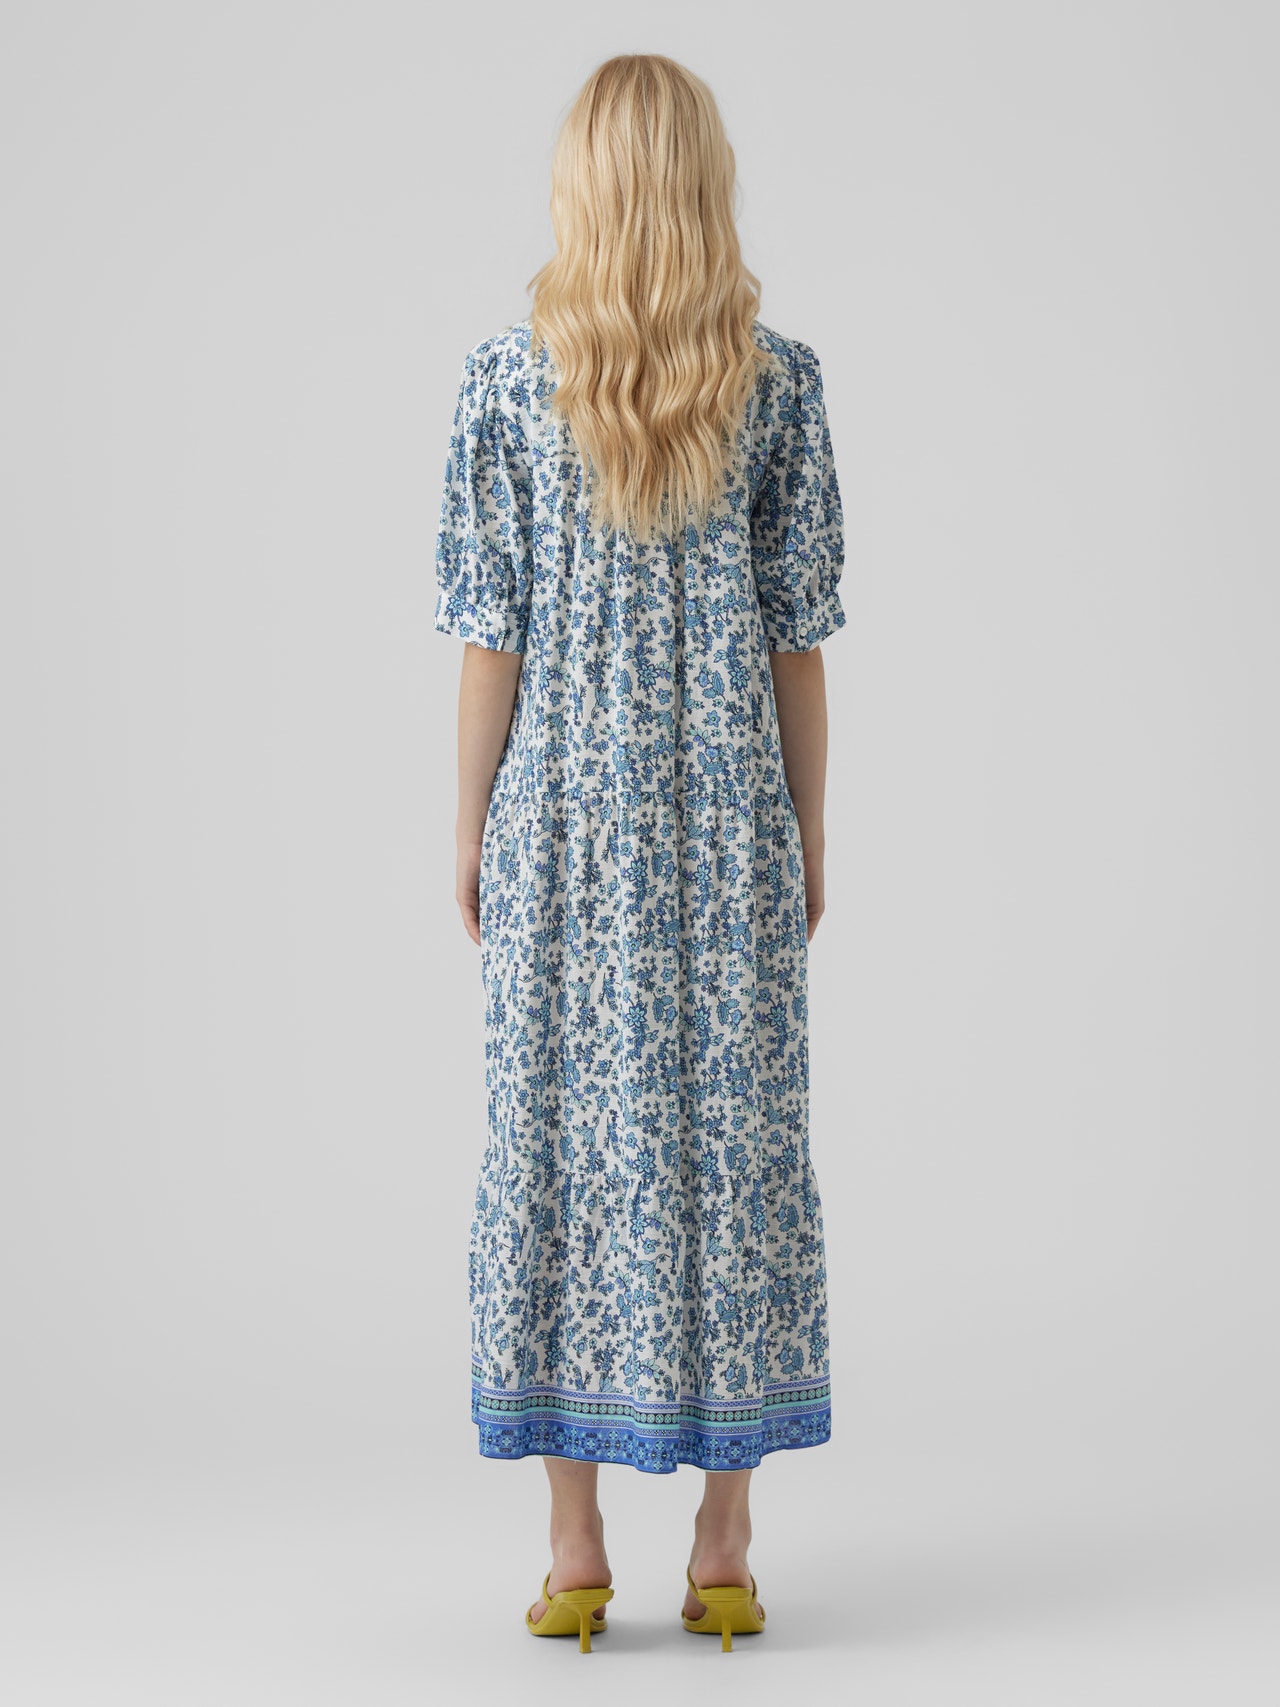 Vero Moda VMMILAN Short dress -Dazzling Blue - 10281758